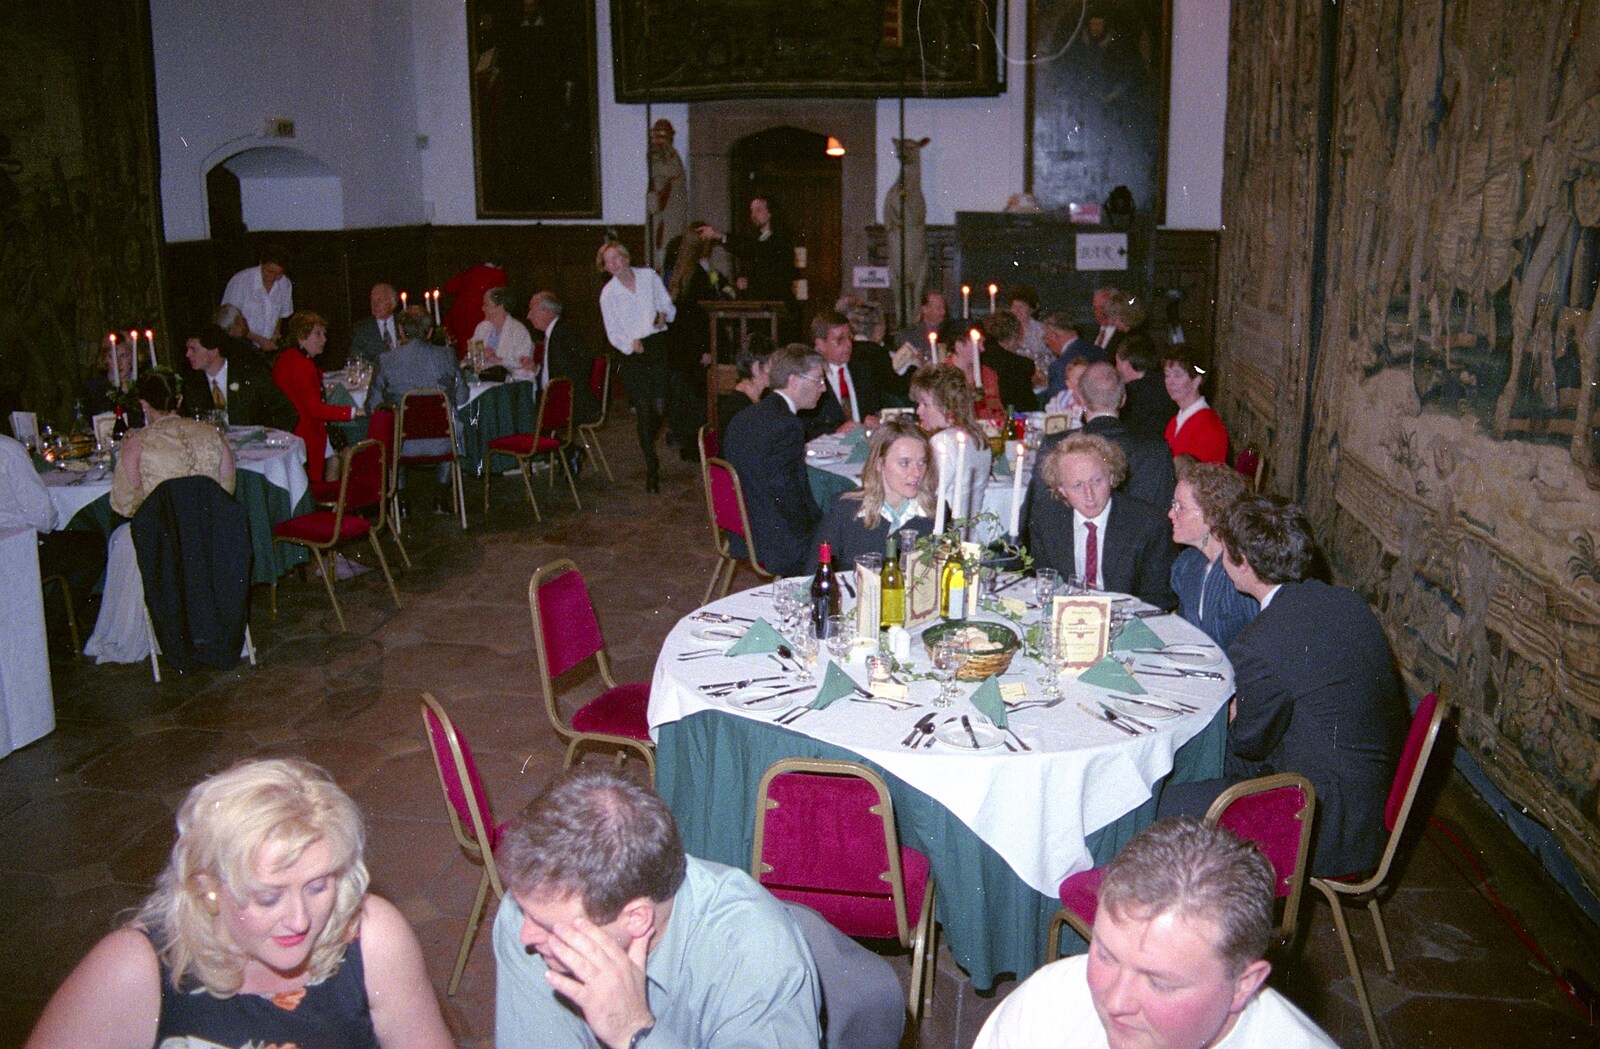 Stuart and Sarah's CISU Wedding, Naworth Castle, Brampton, Cumbria - 21st September 1996: Dinner conversation